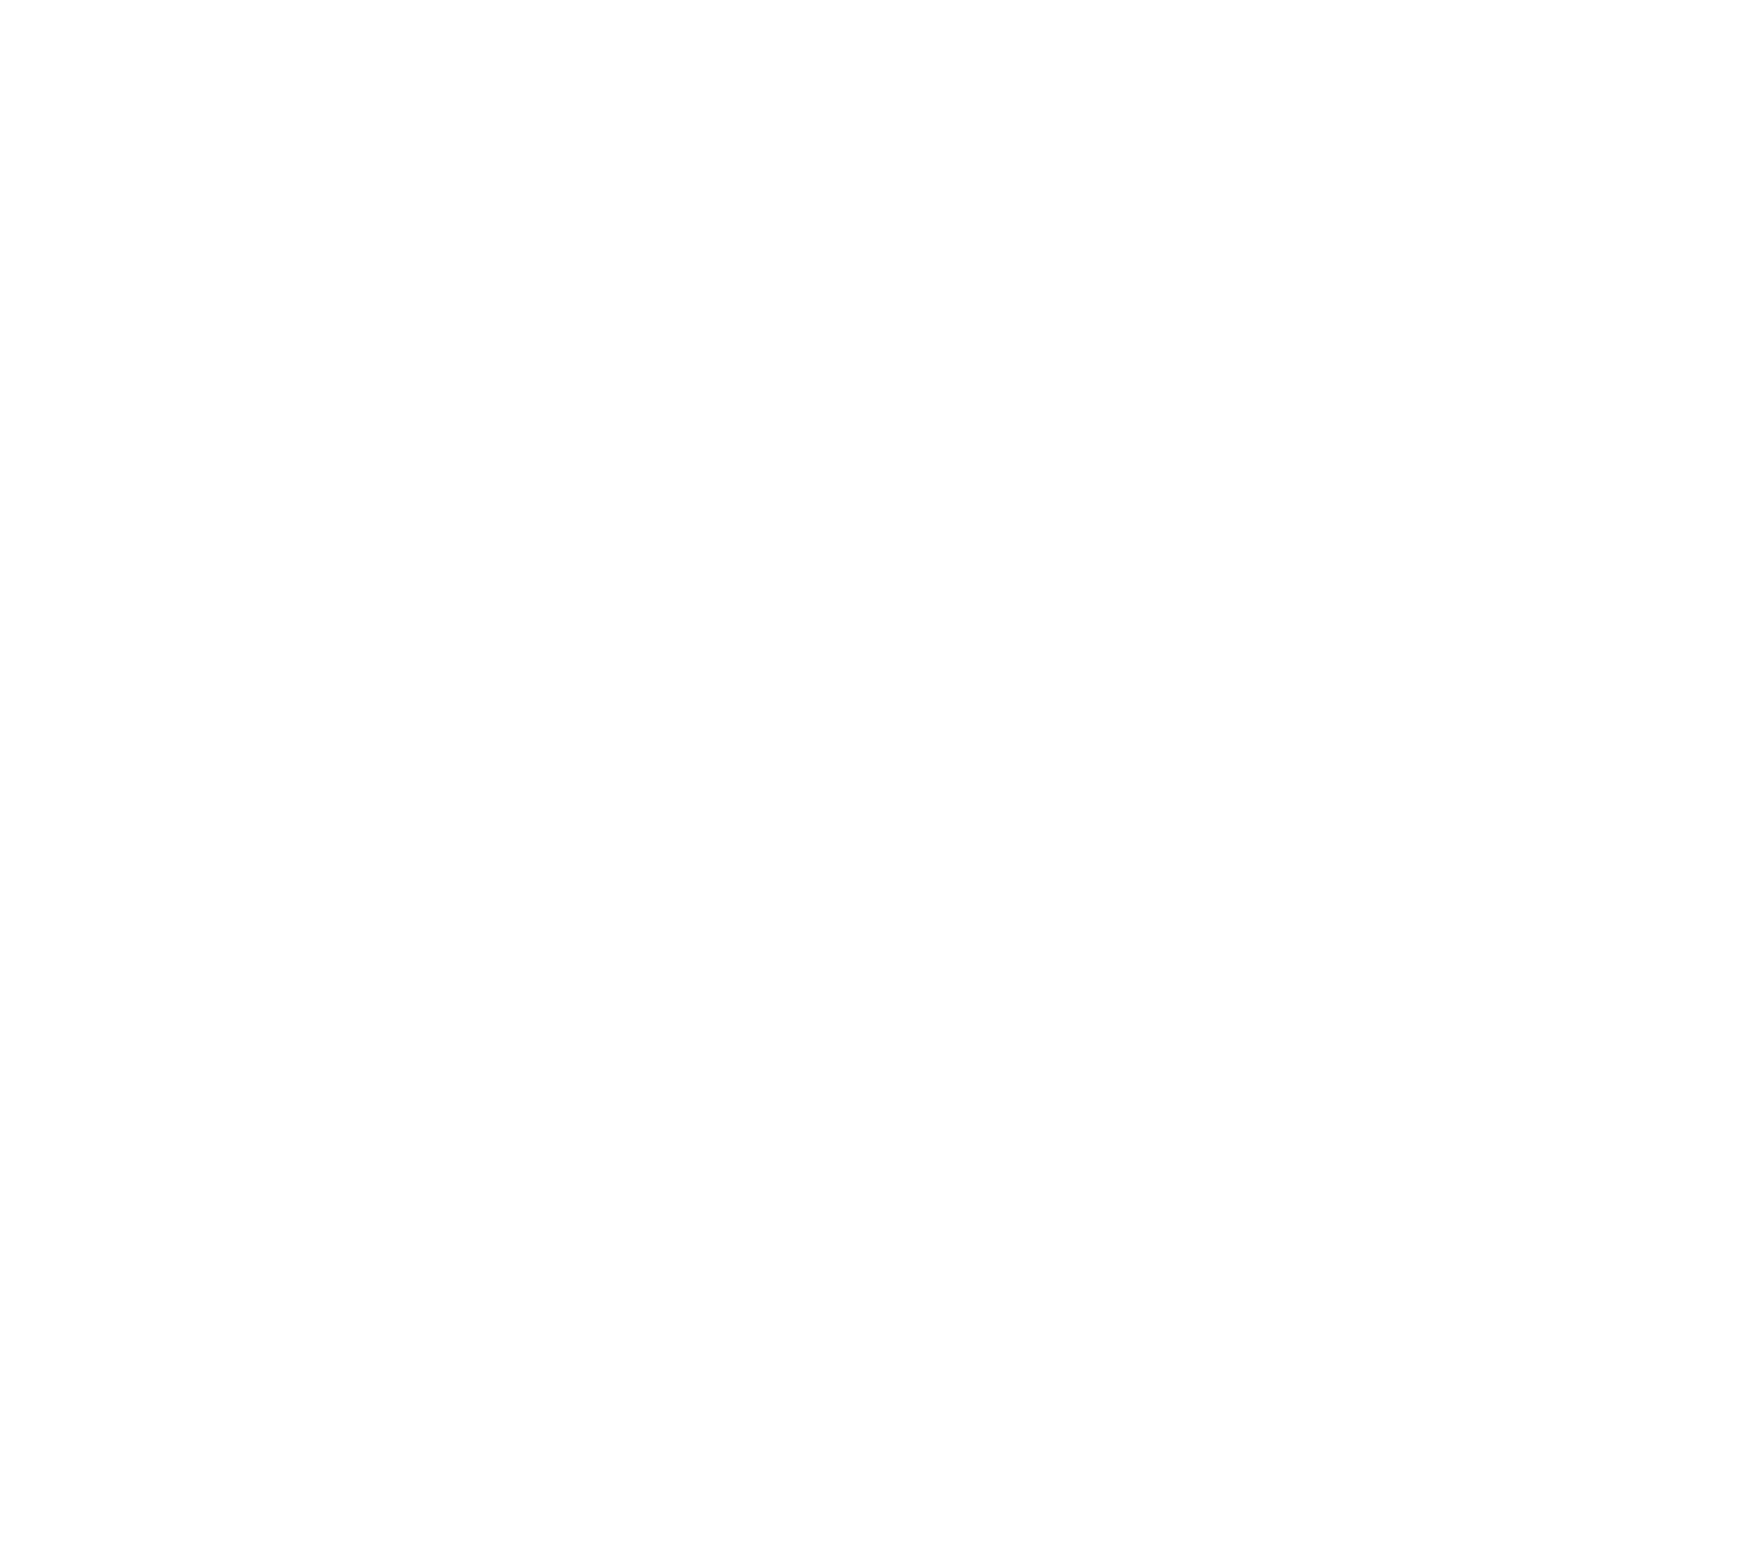 Na aña 1987 despues di a caba MTS-Bouwkunde na Aruba, Francisco  Frank  Mejia a sigui studia na Hulanda  Na 1992 el a   